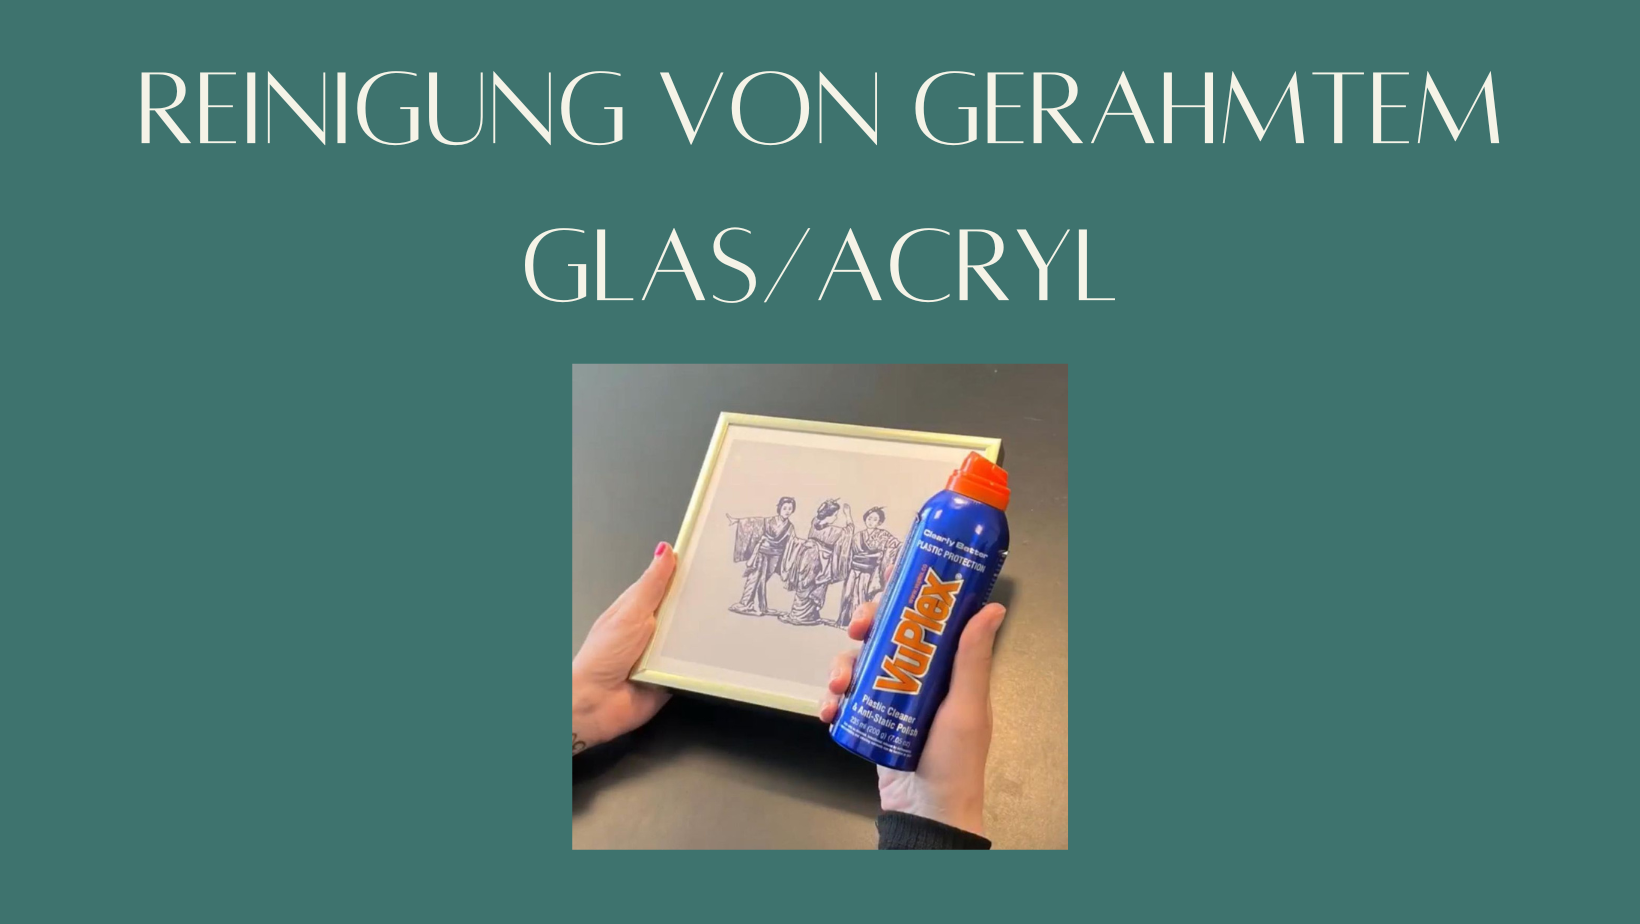 DIE REINIGUNG VON GERAHMTEM GLAS/ACRYLGLAS 